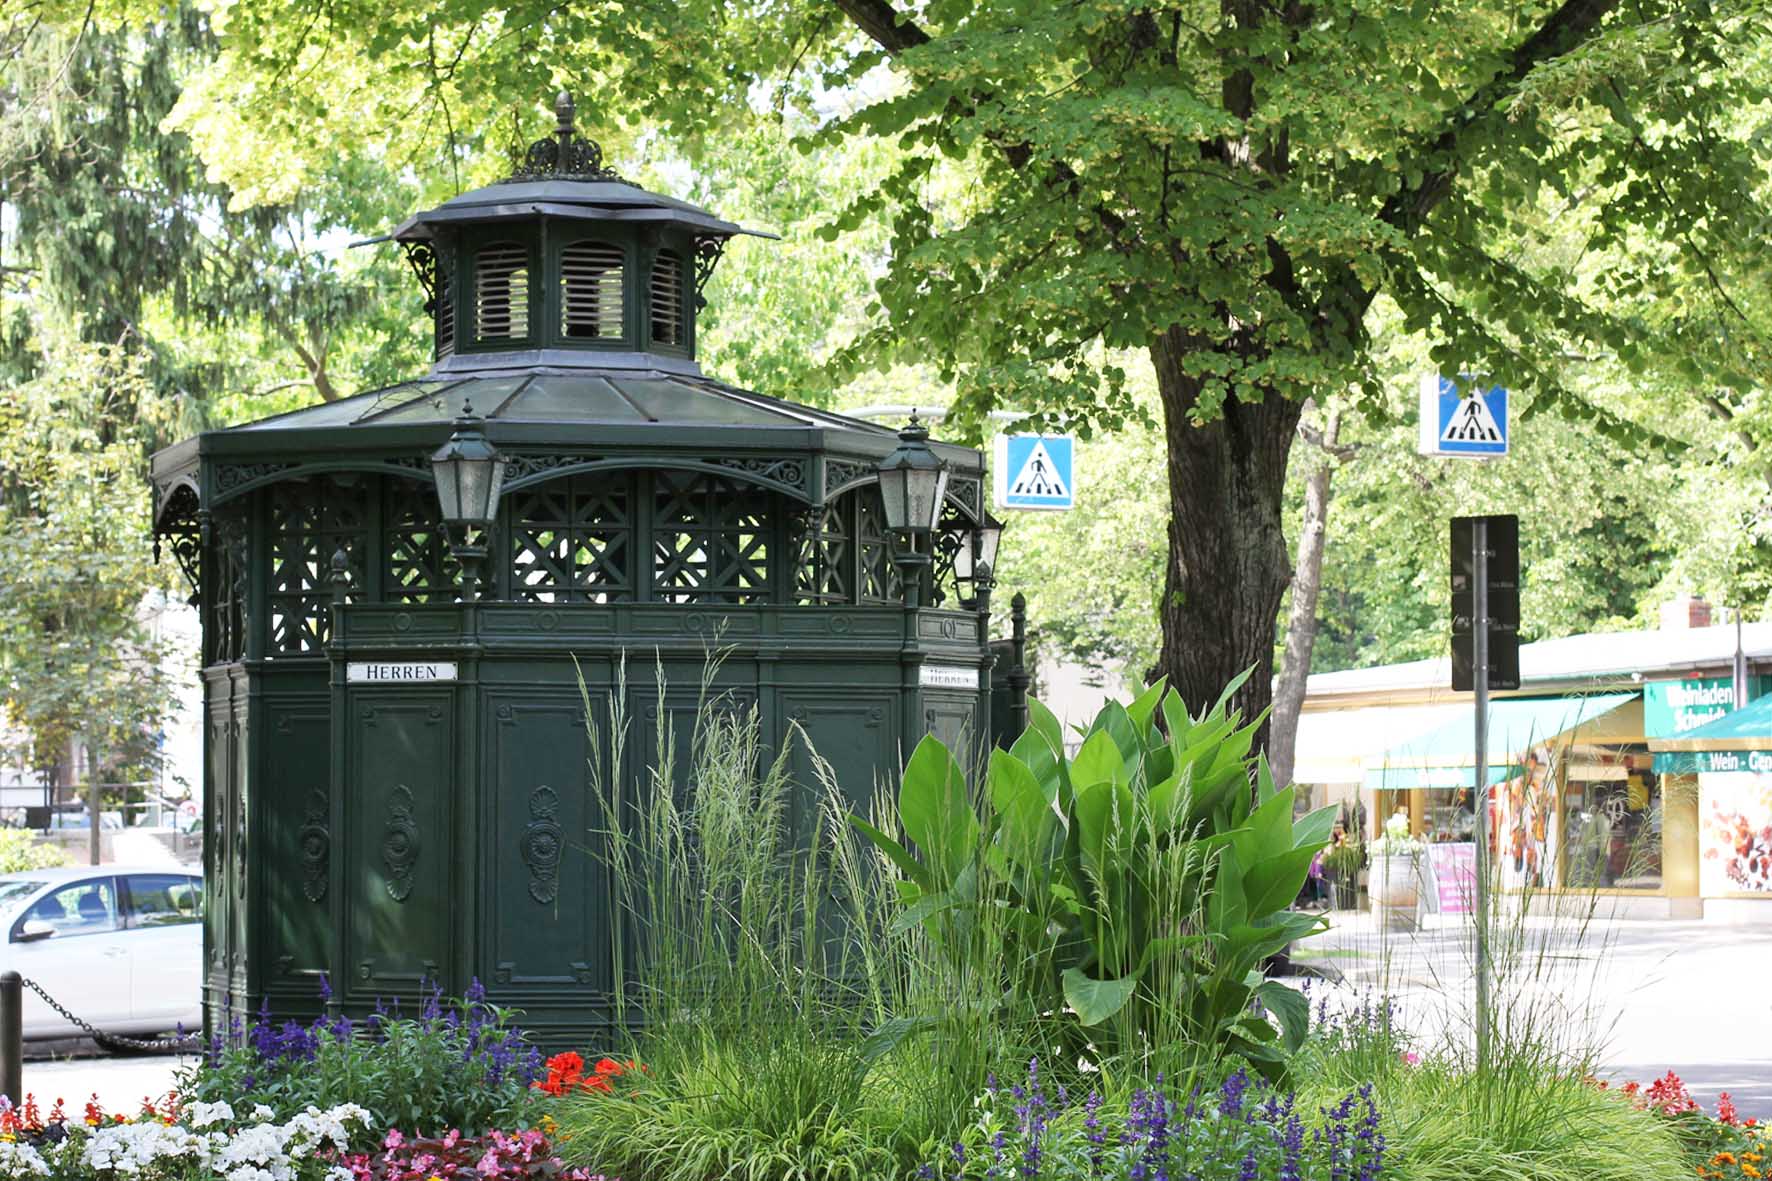 Café Achteck - Fellbacher Platz - an example of Berlin's classic 19th century green cast iron public toilets